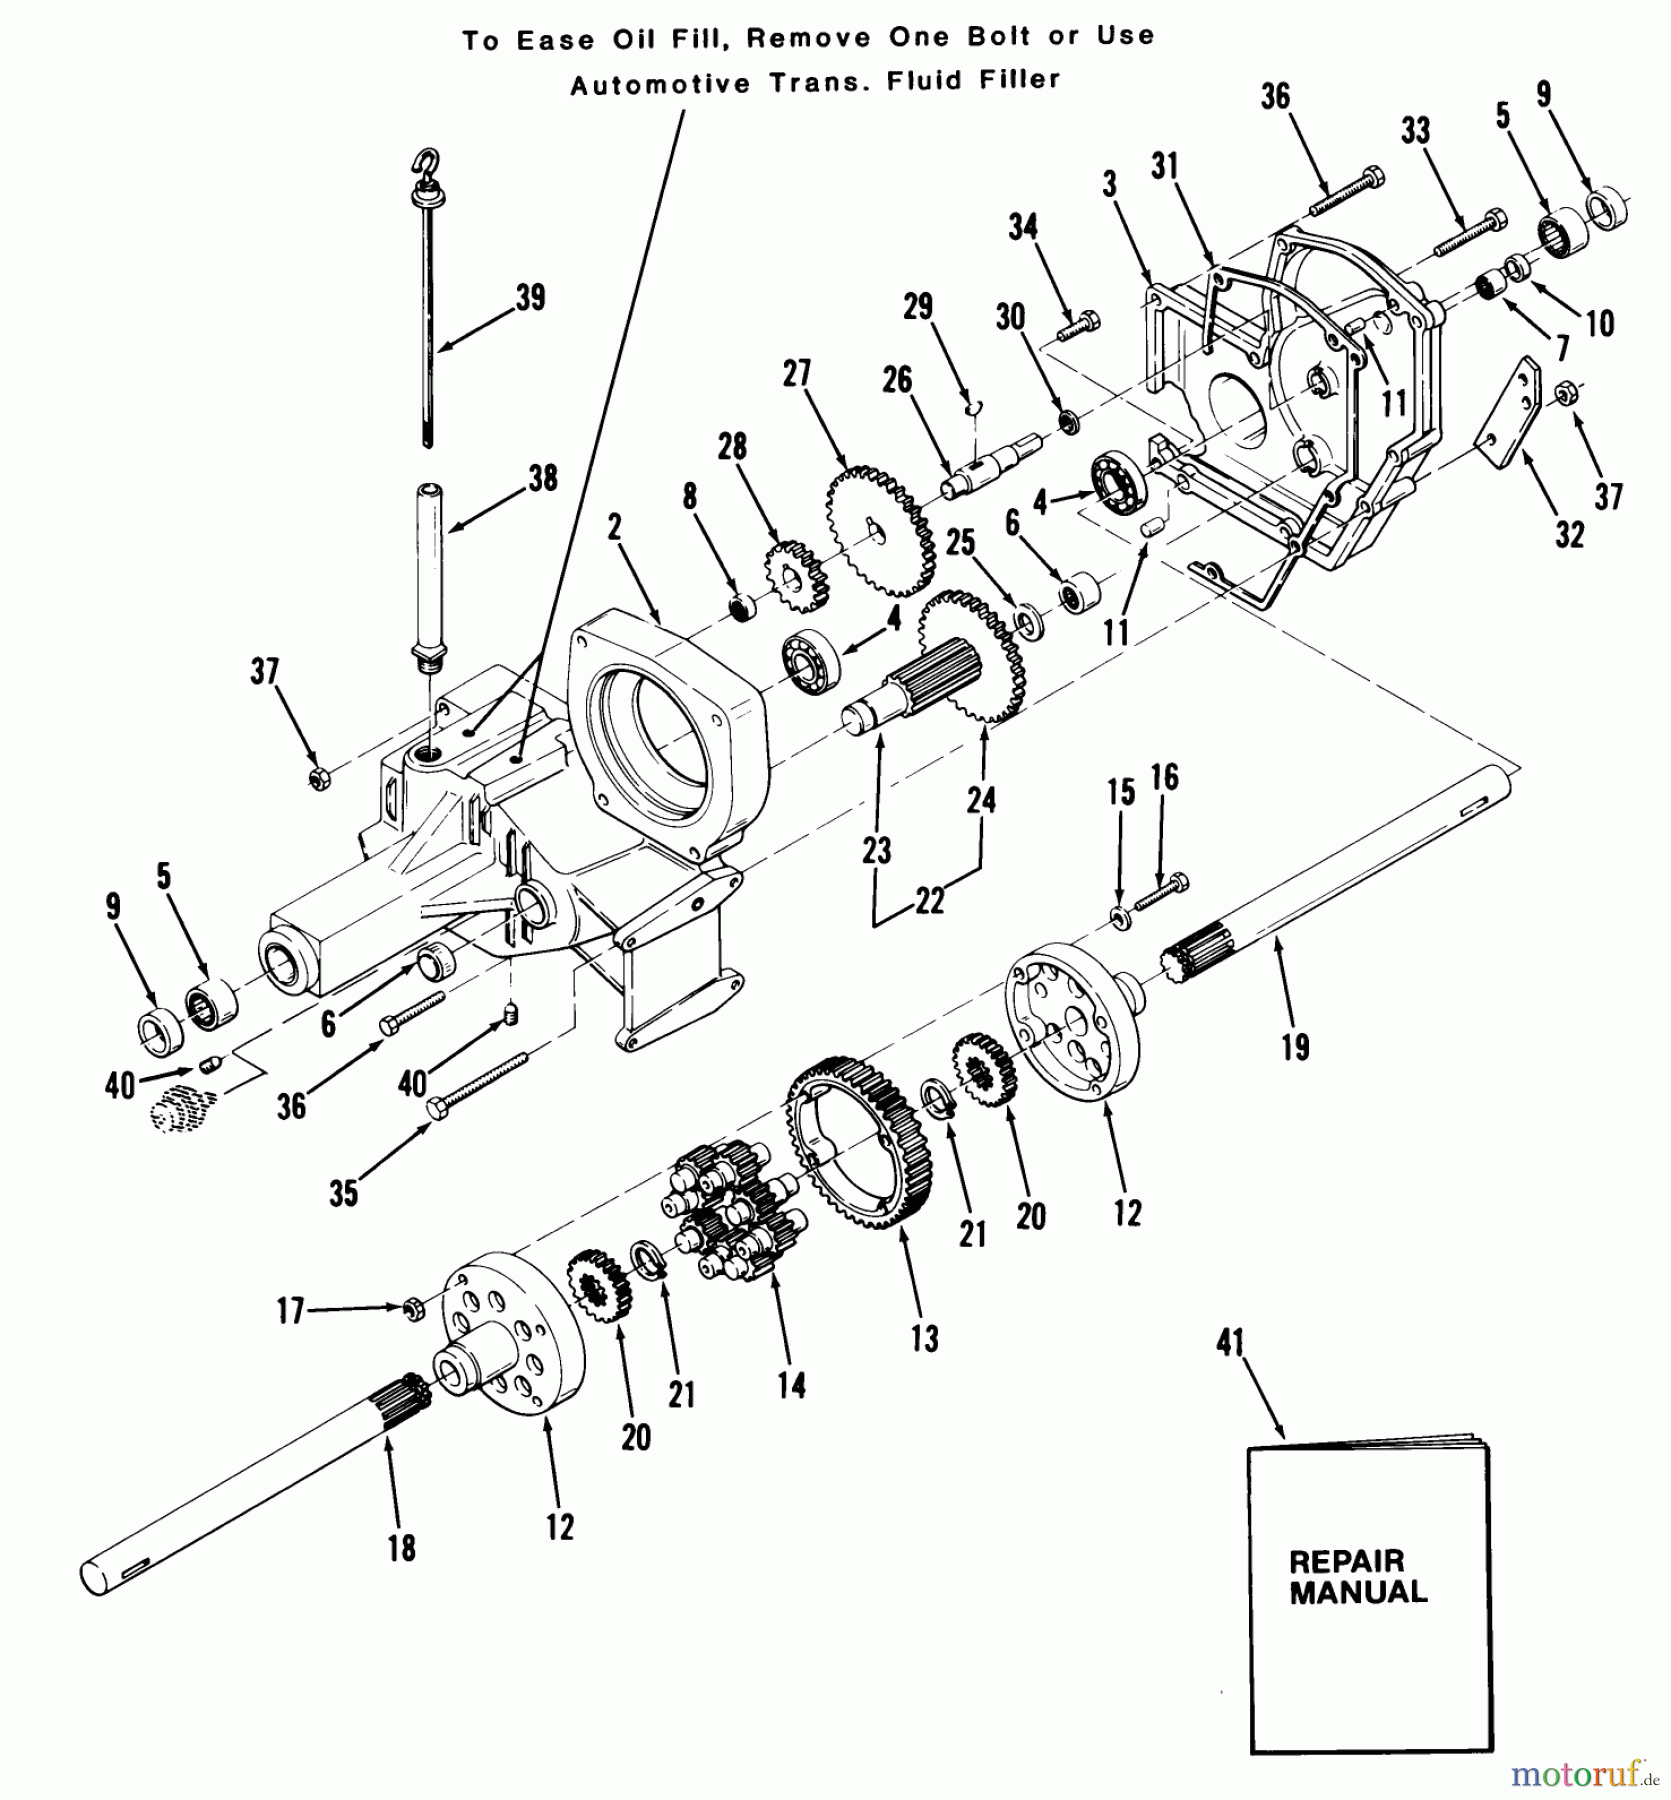  Toro Neu Mowers, Lawn & Garden Tractor Seite 1 31-18OE02 (518-H) - Toro 518-H Garden Tractor, 1989 TRANSAXLE